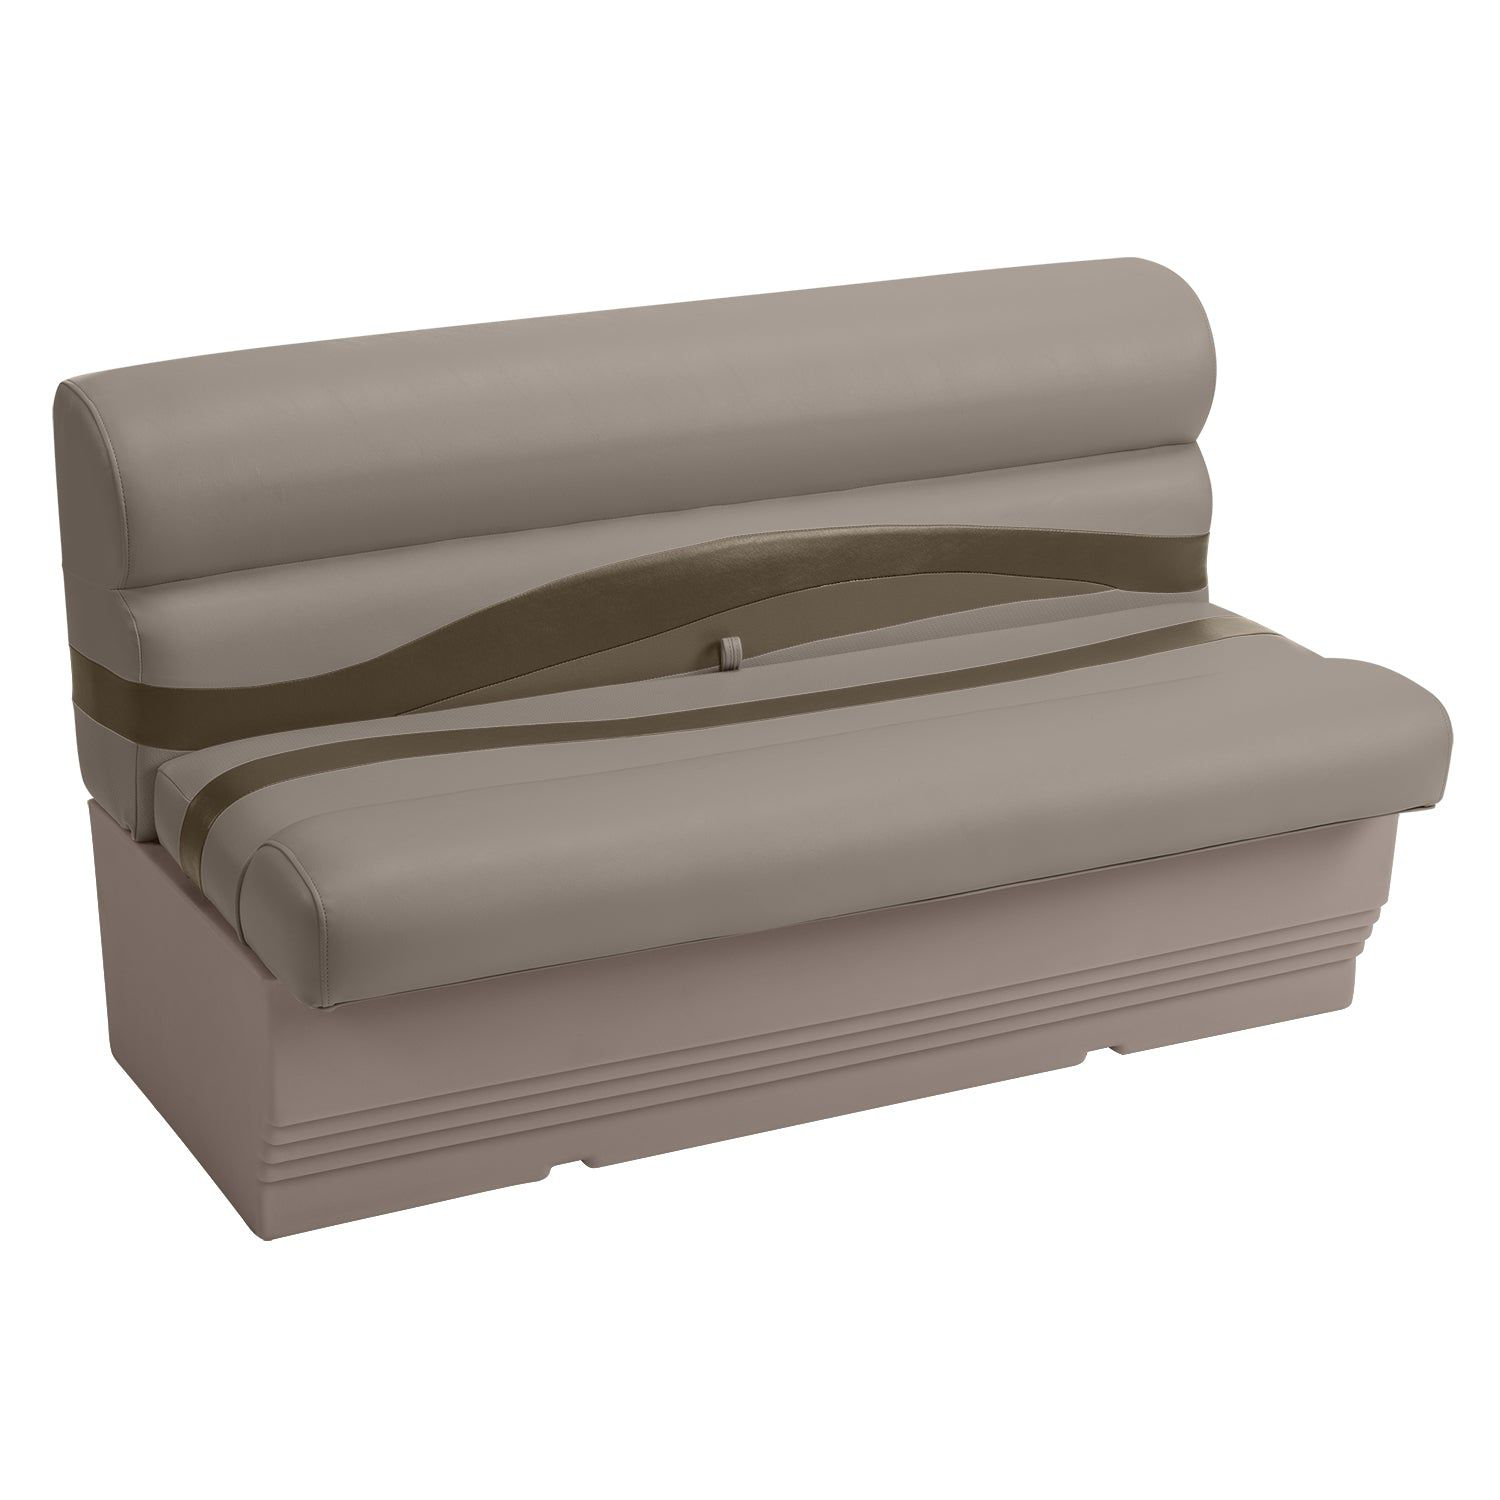 Wise Premier Series Pontoon Furniture 50"" Bench Seat with Base